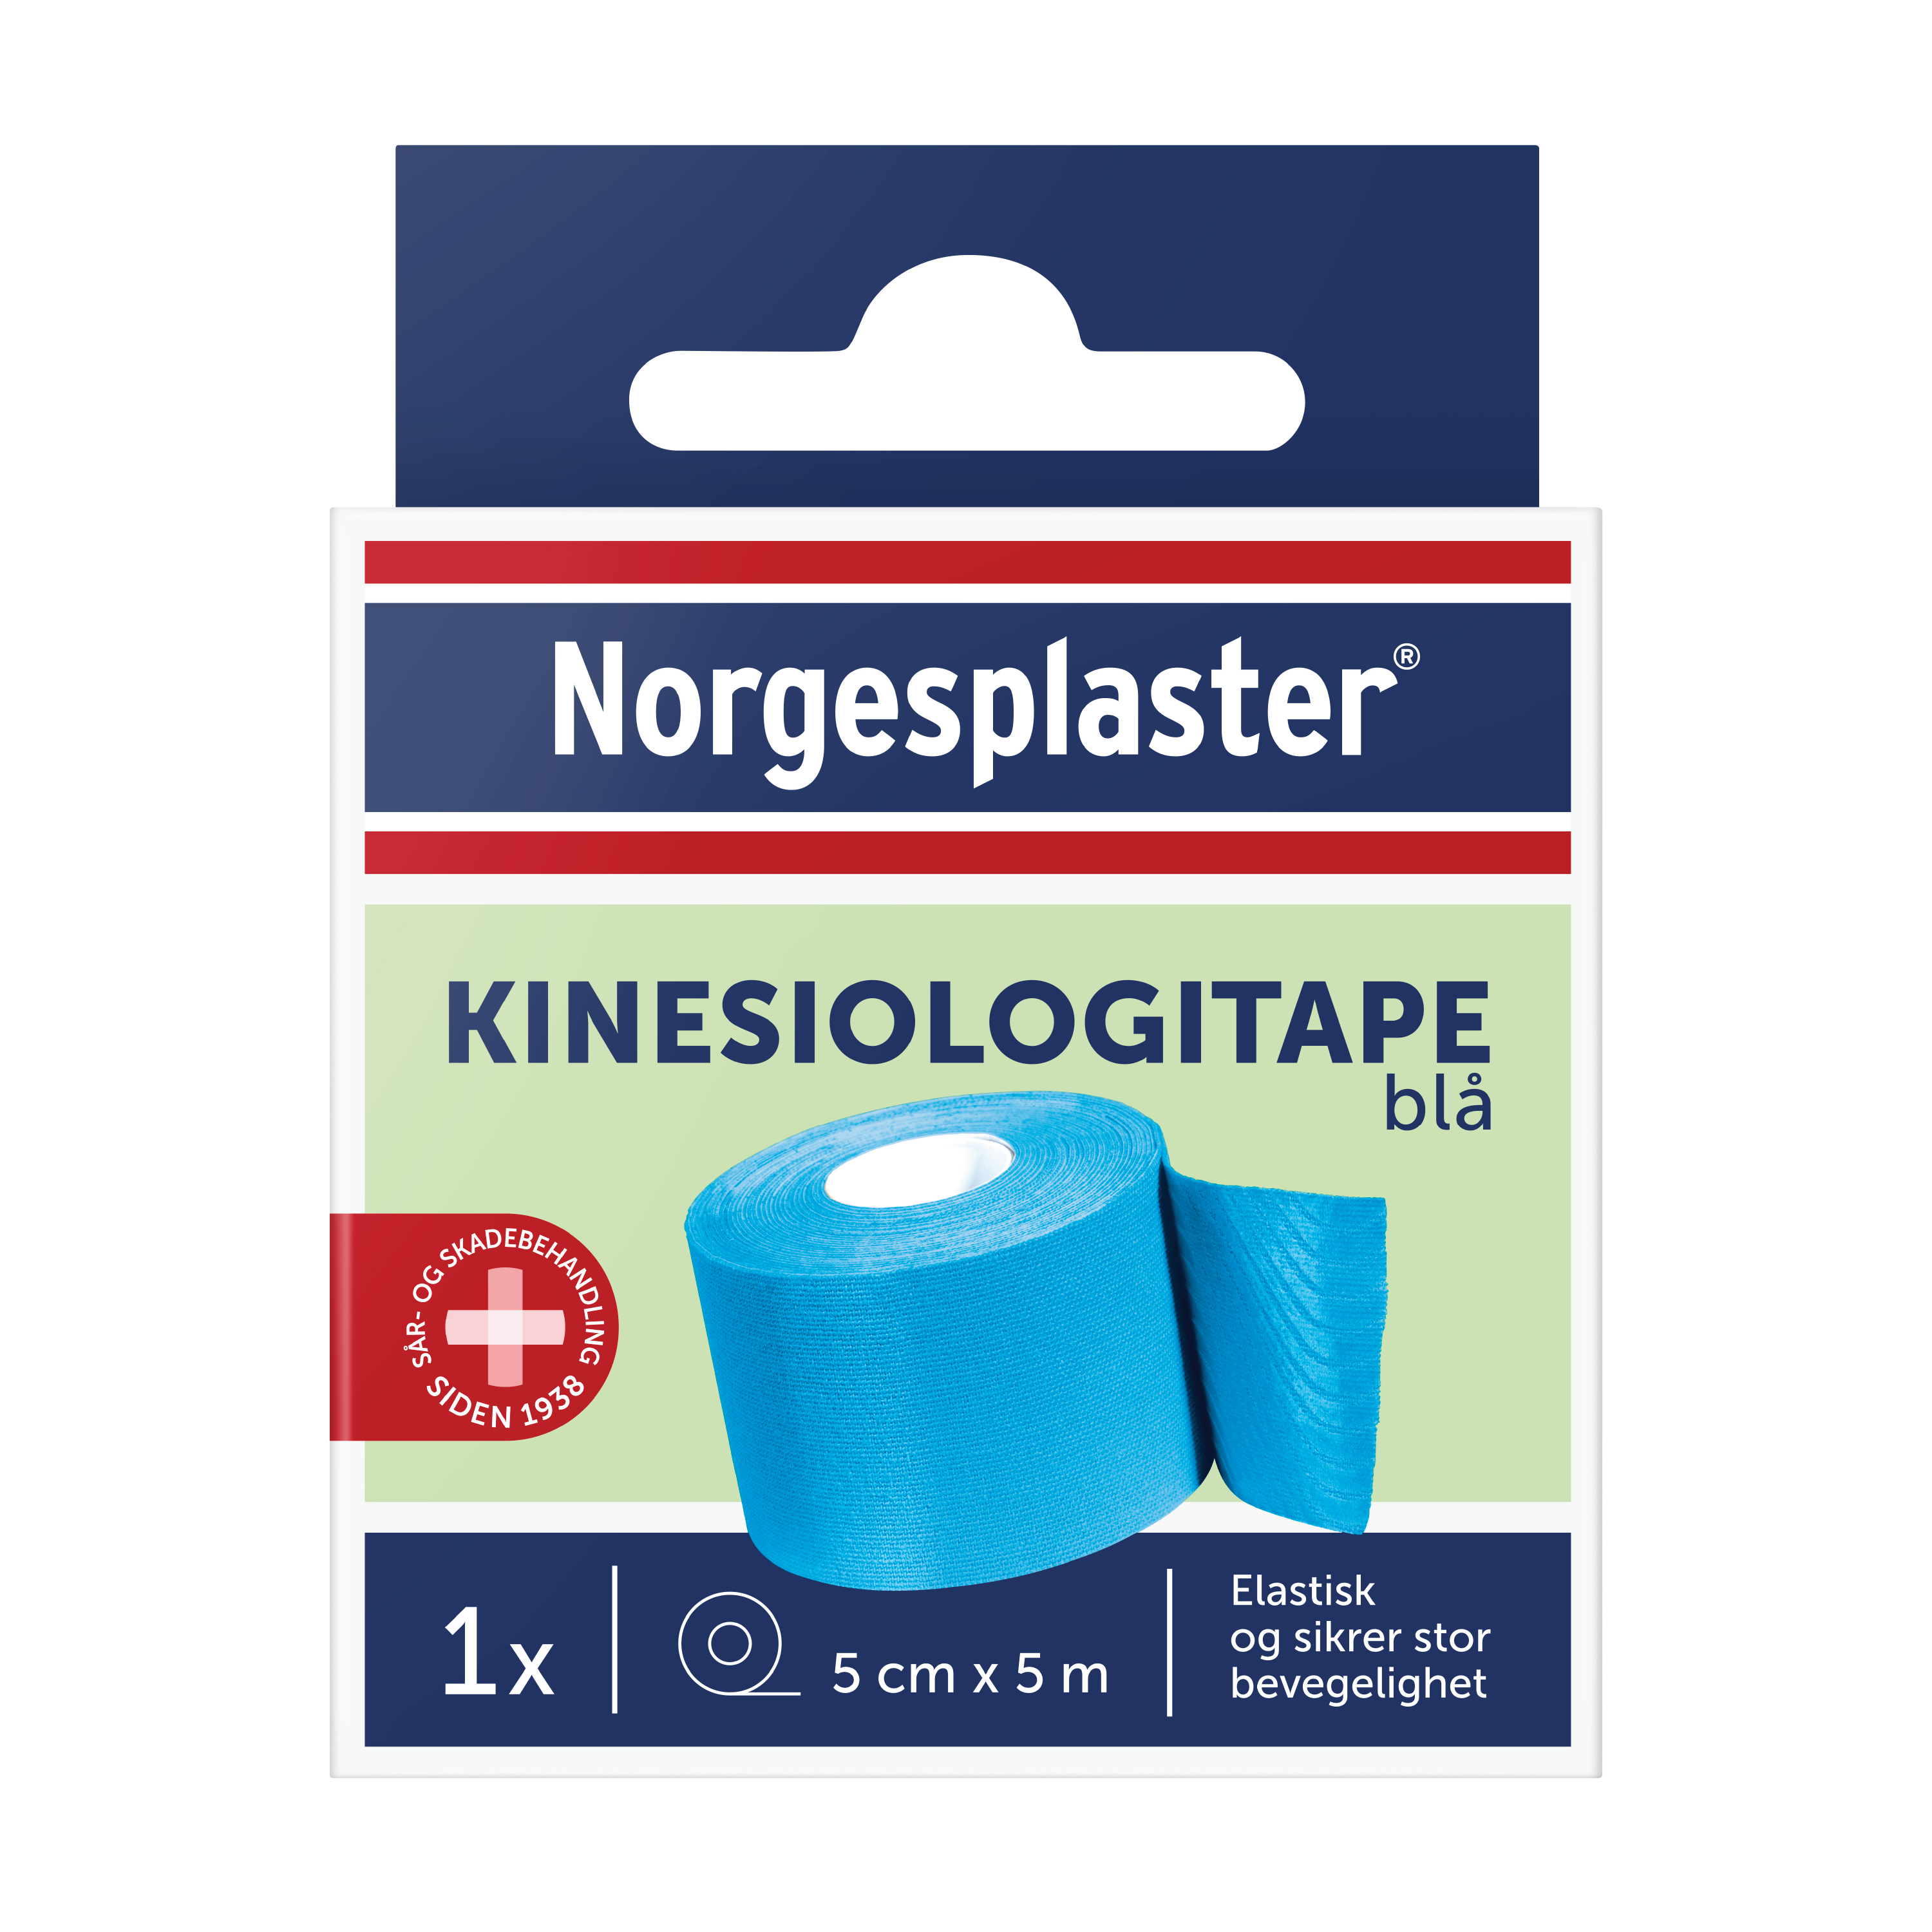 Norgesplaster Kinesiologitape, 5 cm x 5 m, blå, 1 stk.